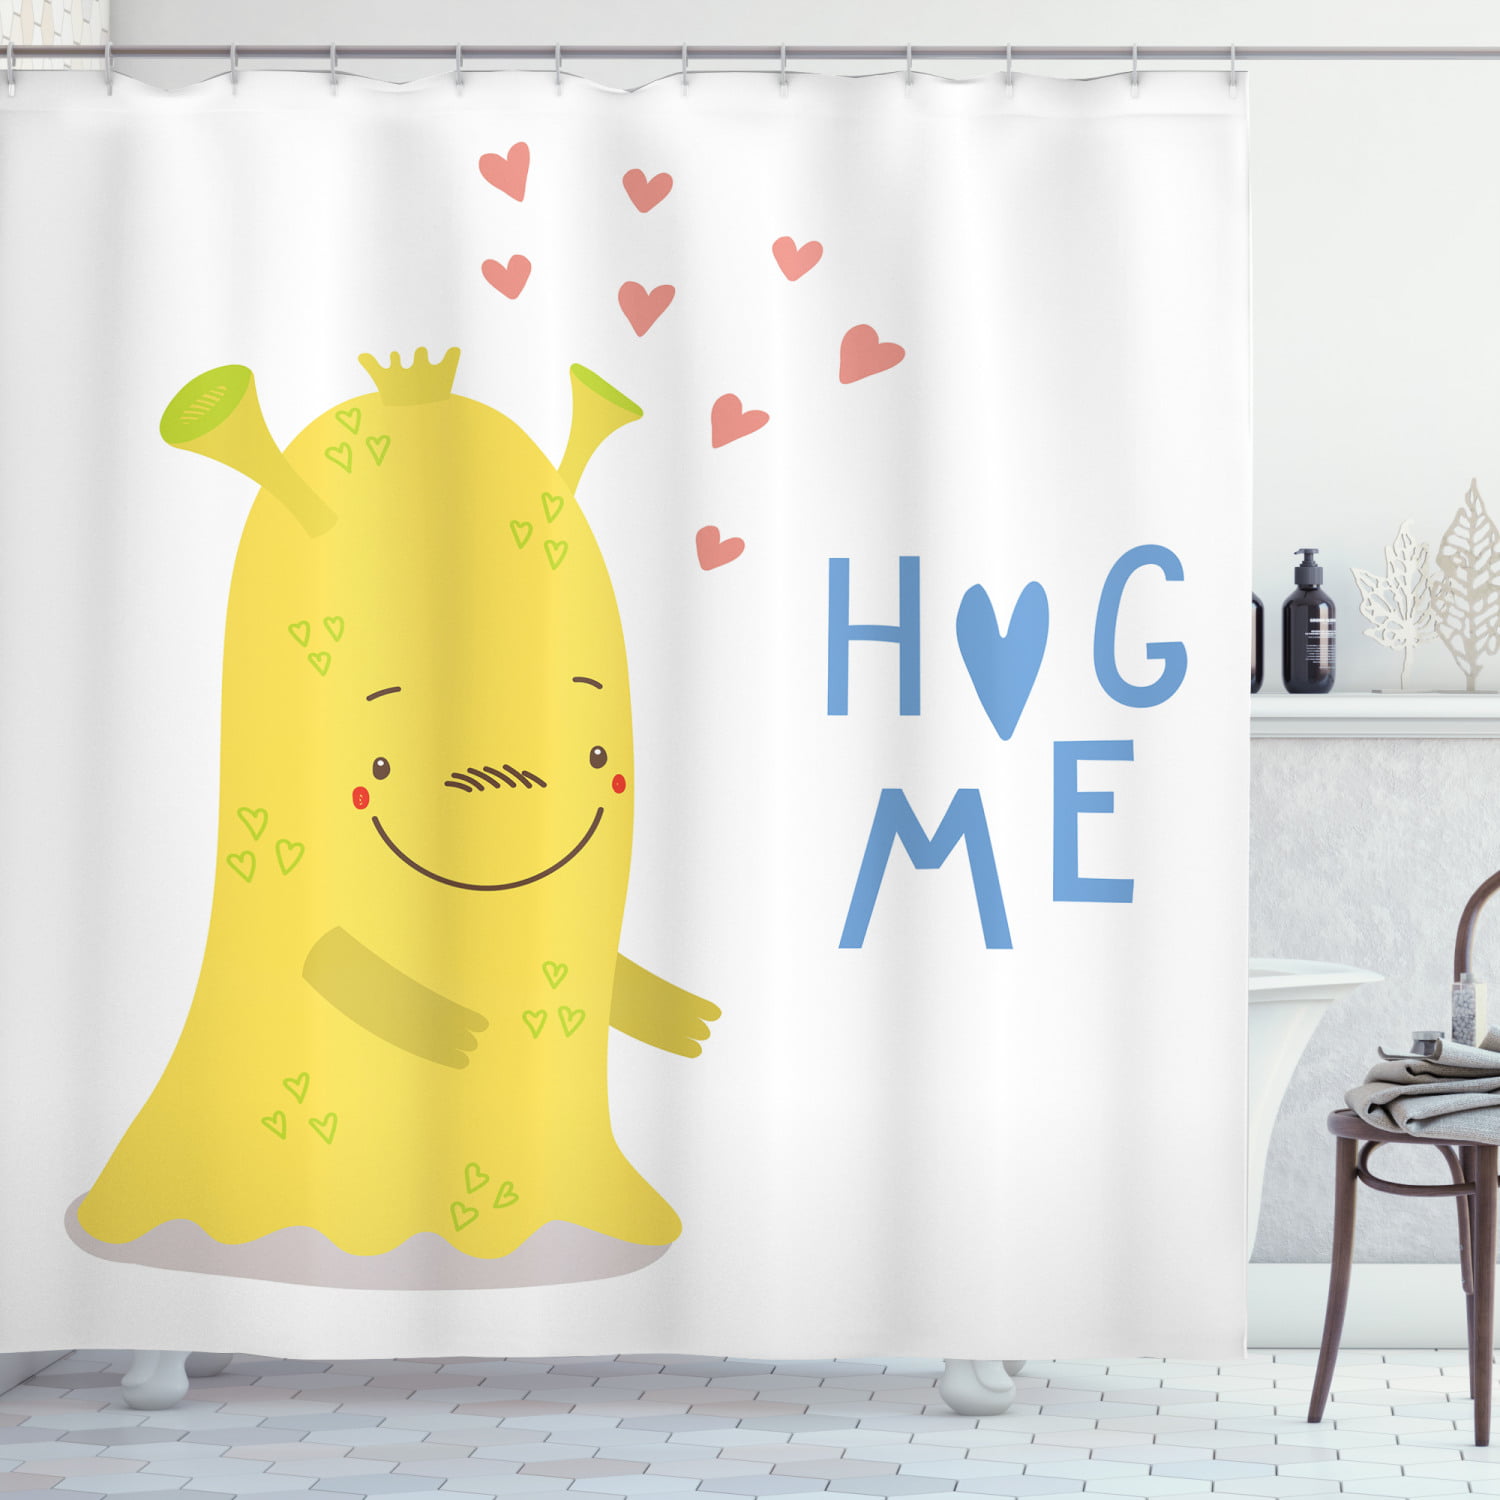 Hug Shower Curtain Cartoonish Design, Monster High Shower Curtain Set